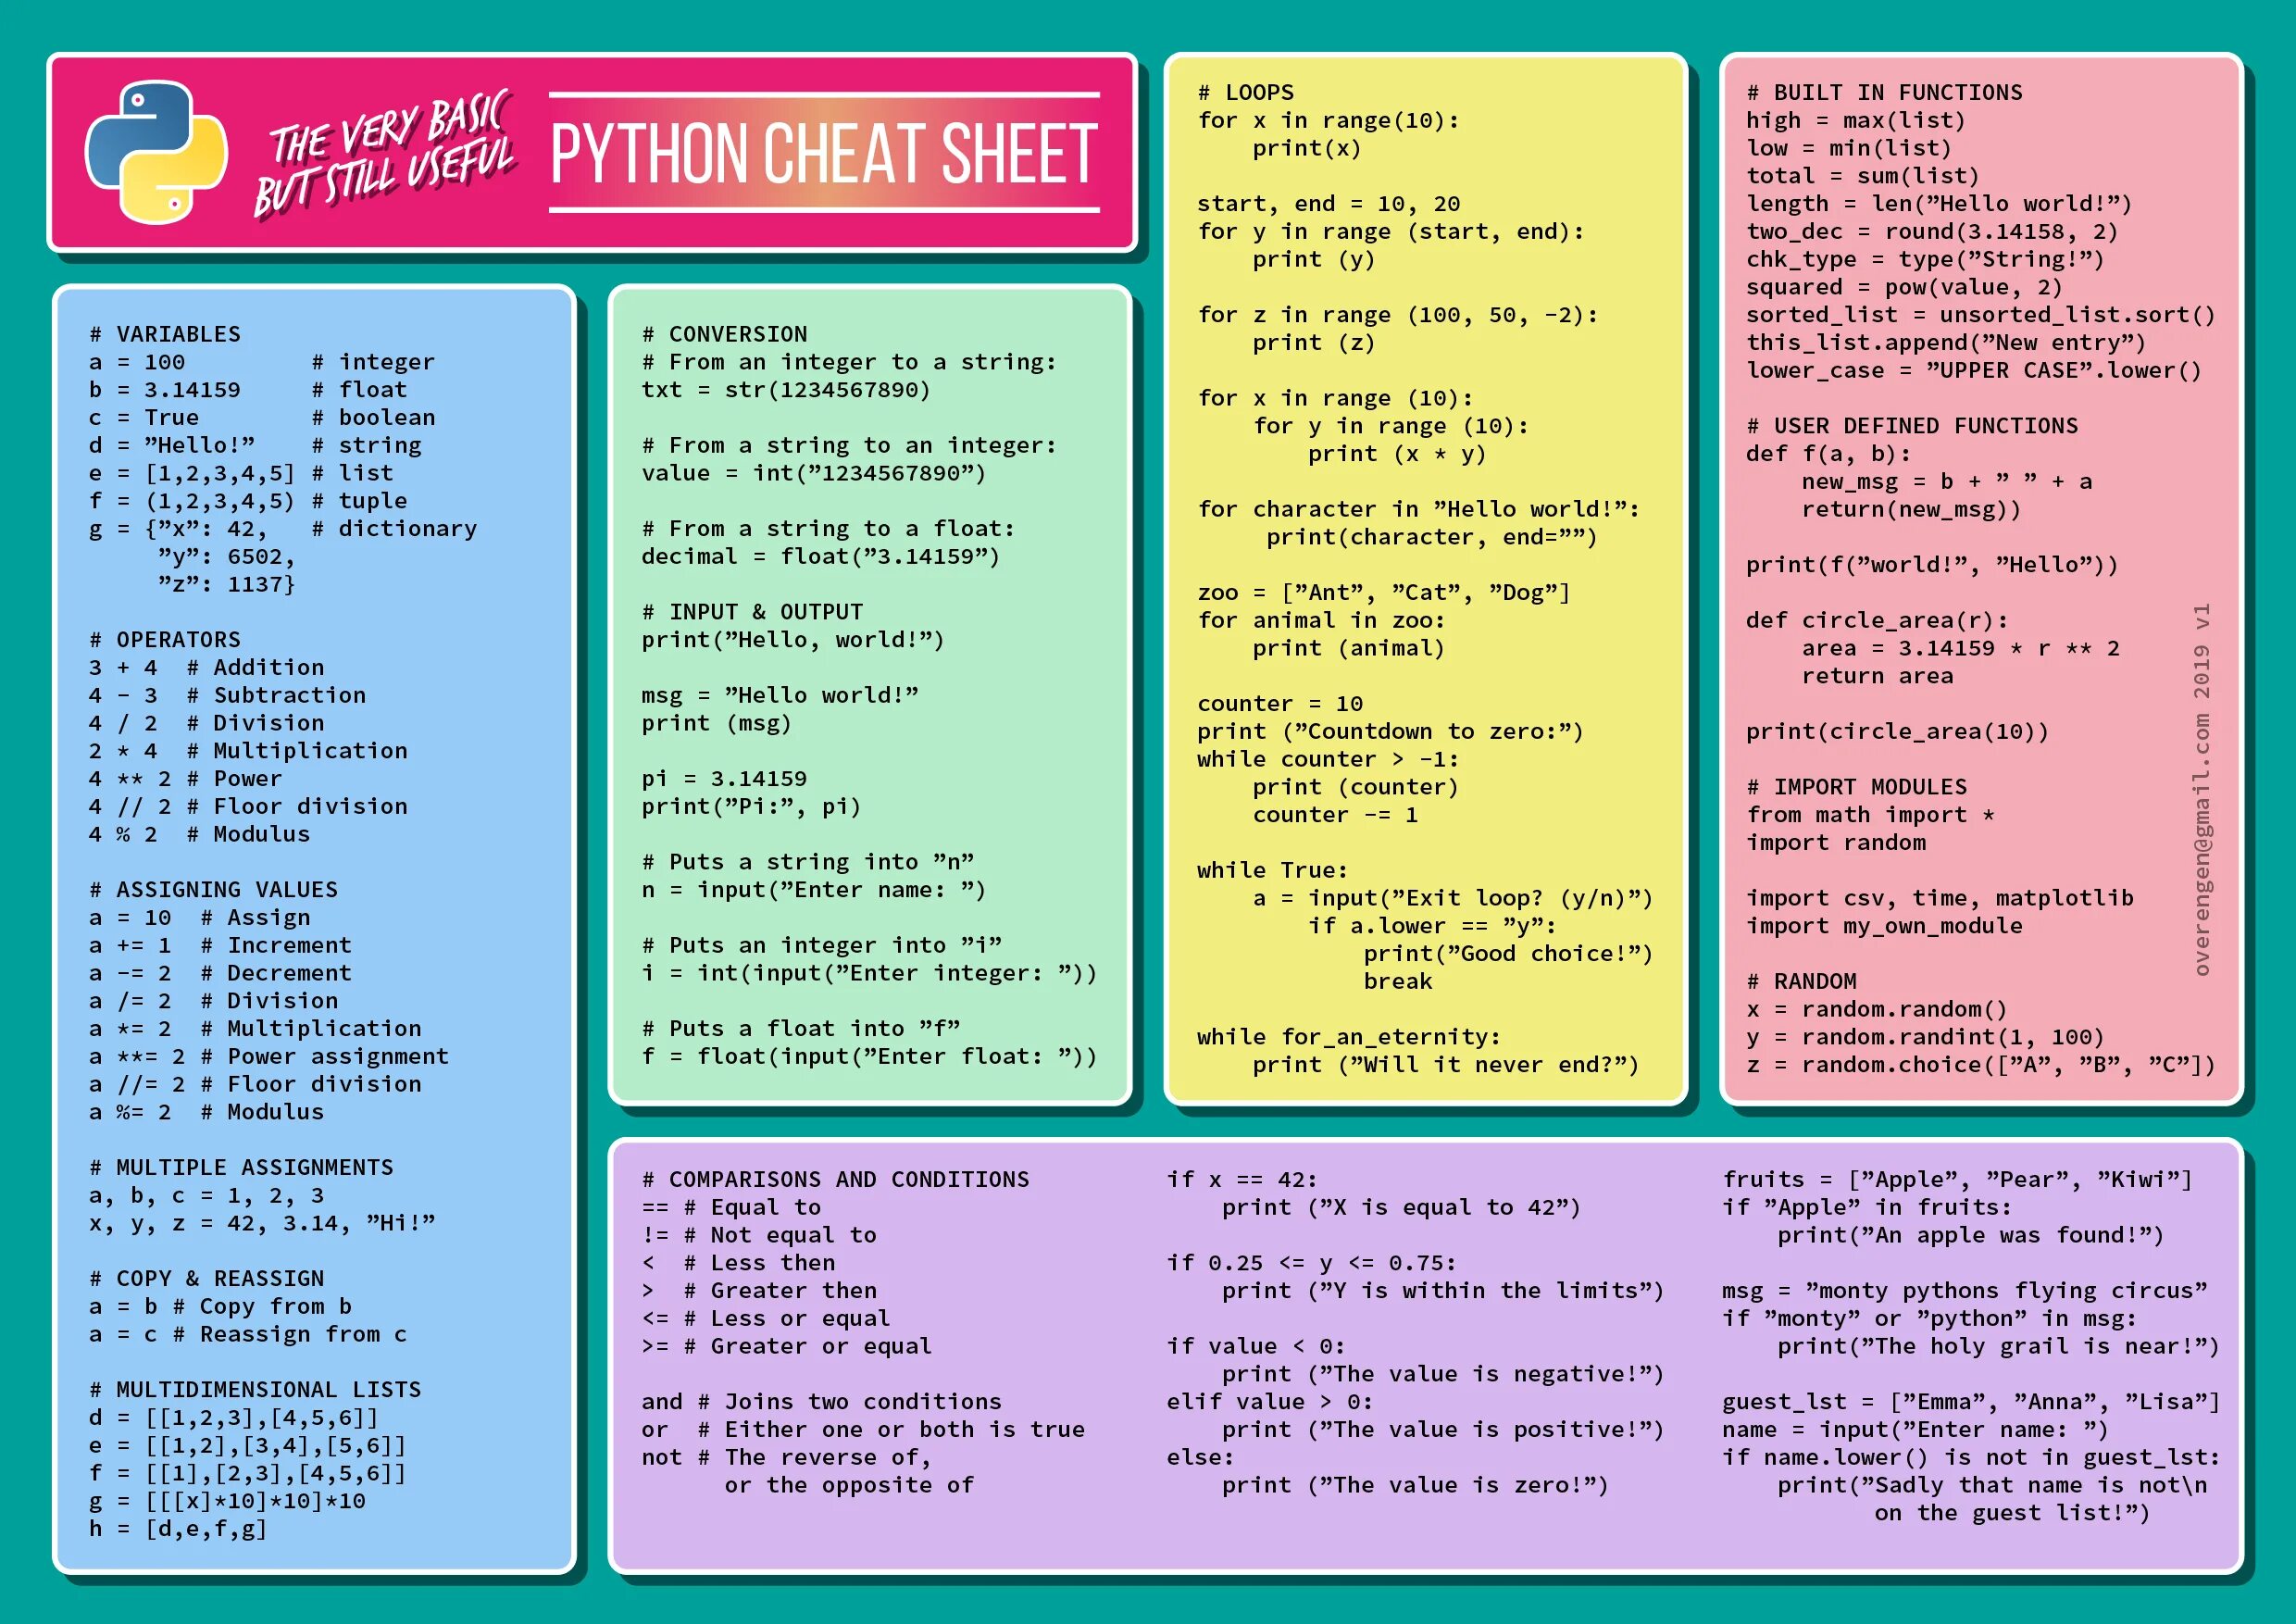 Merge lists list. Шпаргалки по Python 3 для начинающих. Таблица команд Python. Команды питон таблица. Программирование на питоне шпаргалка.